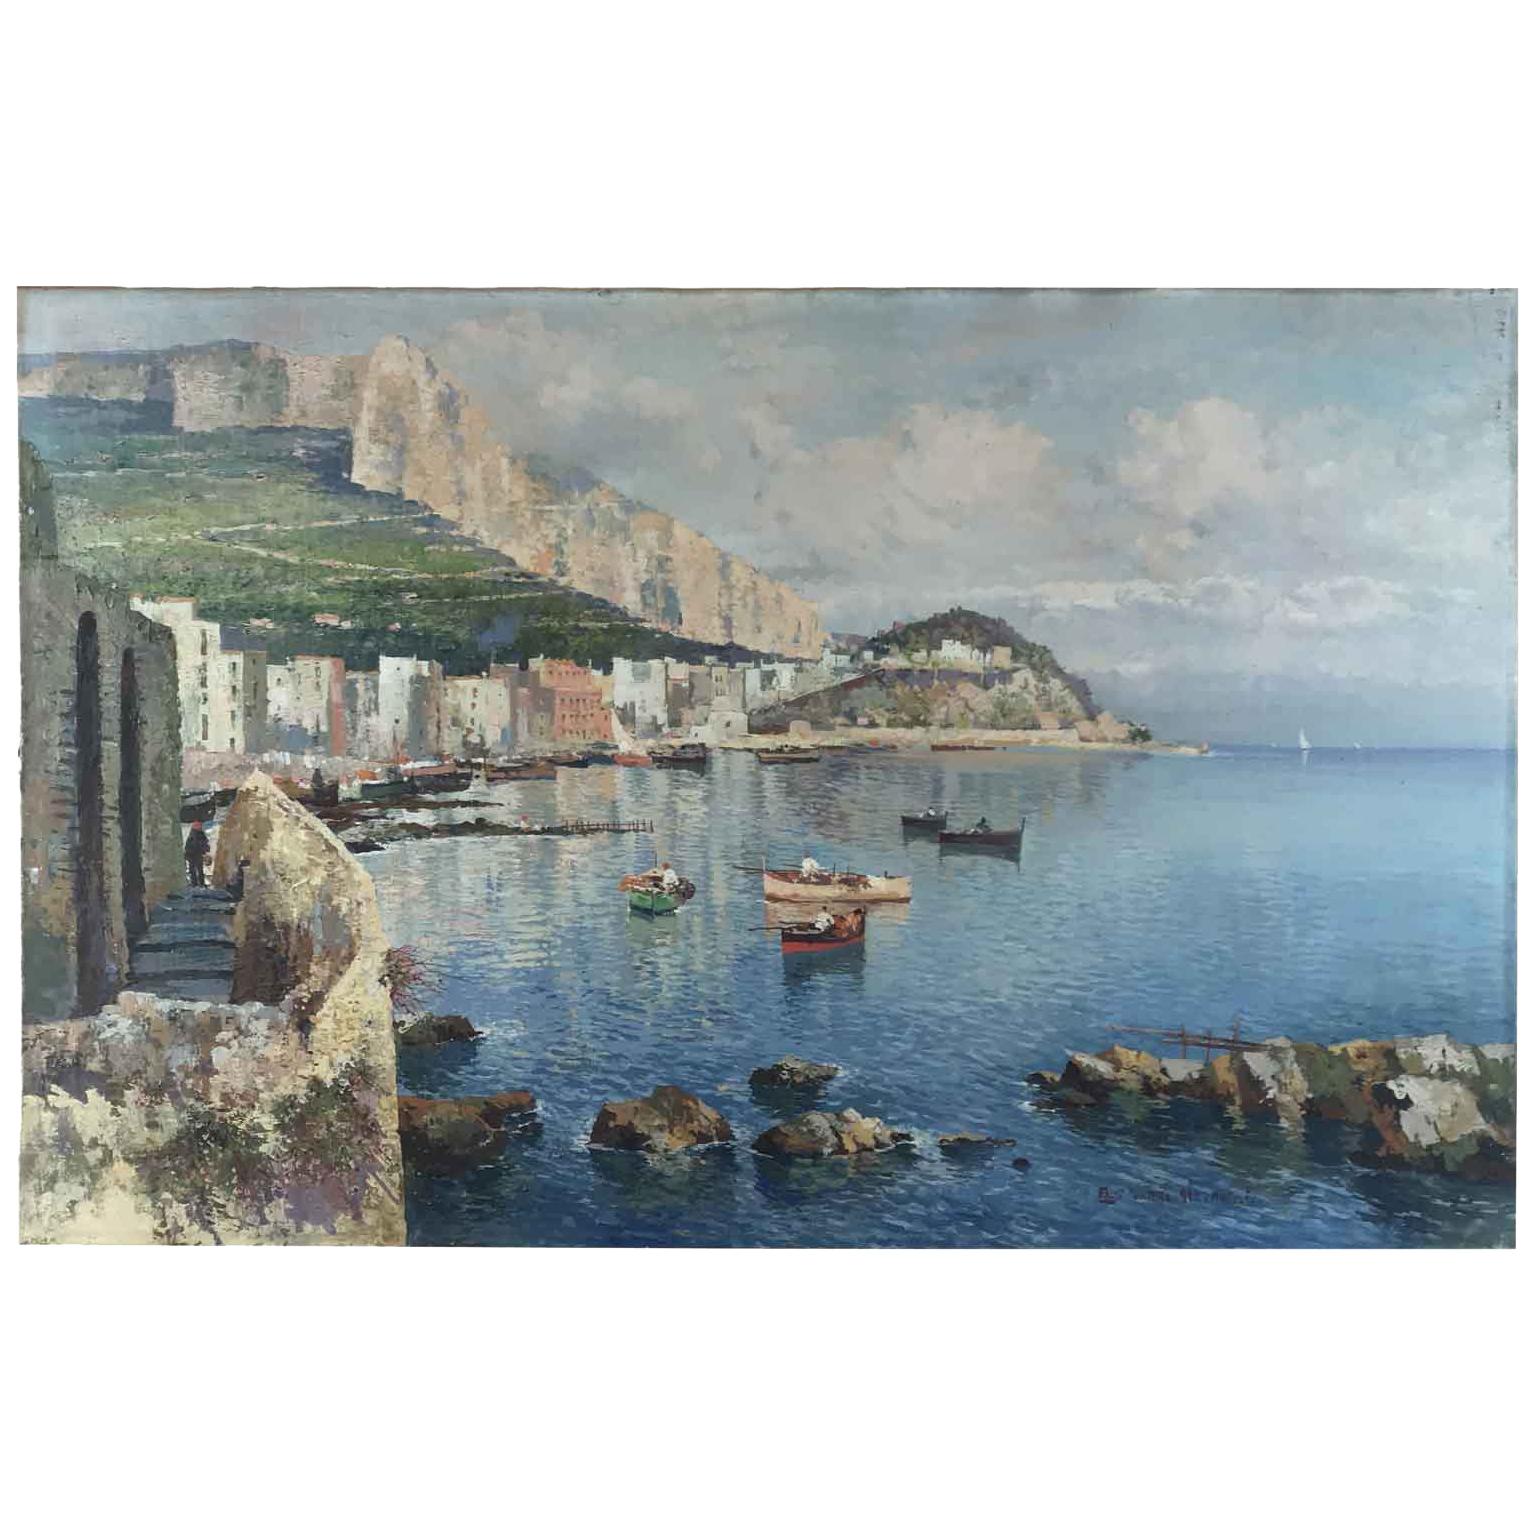 Italian Neapolitan Coastal Marine Landscape by Fausto Pratella 1920 Napoli